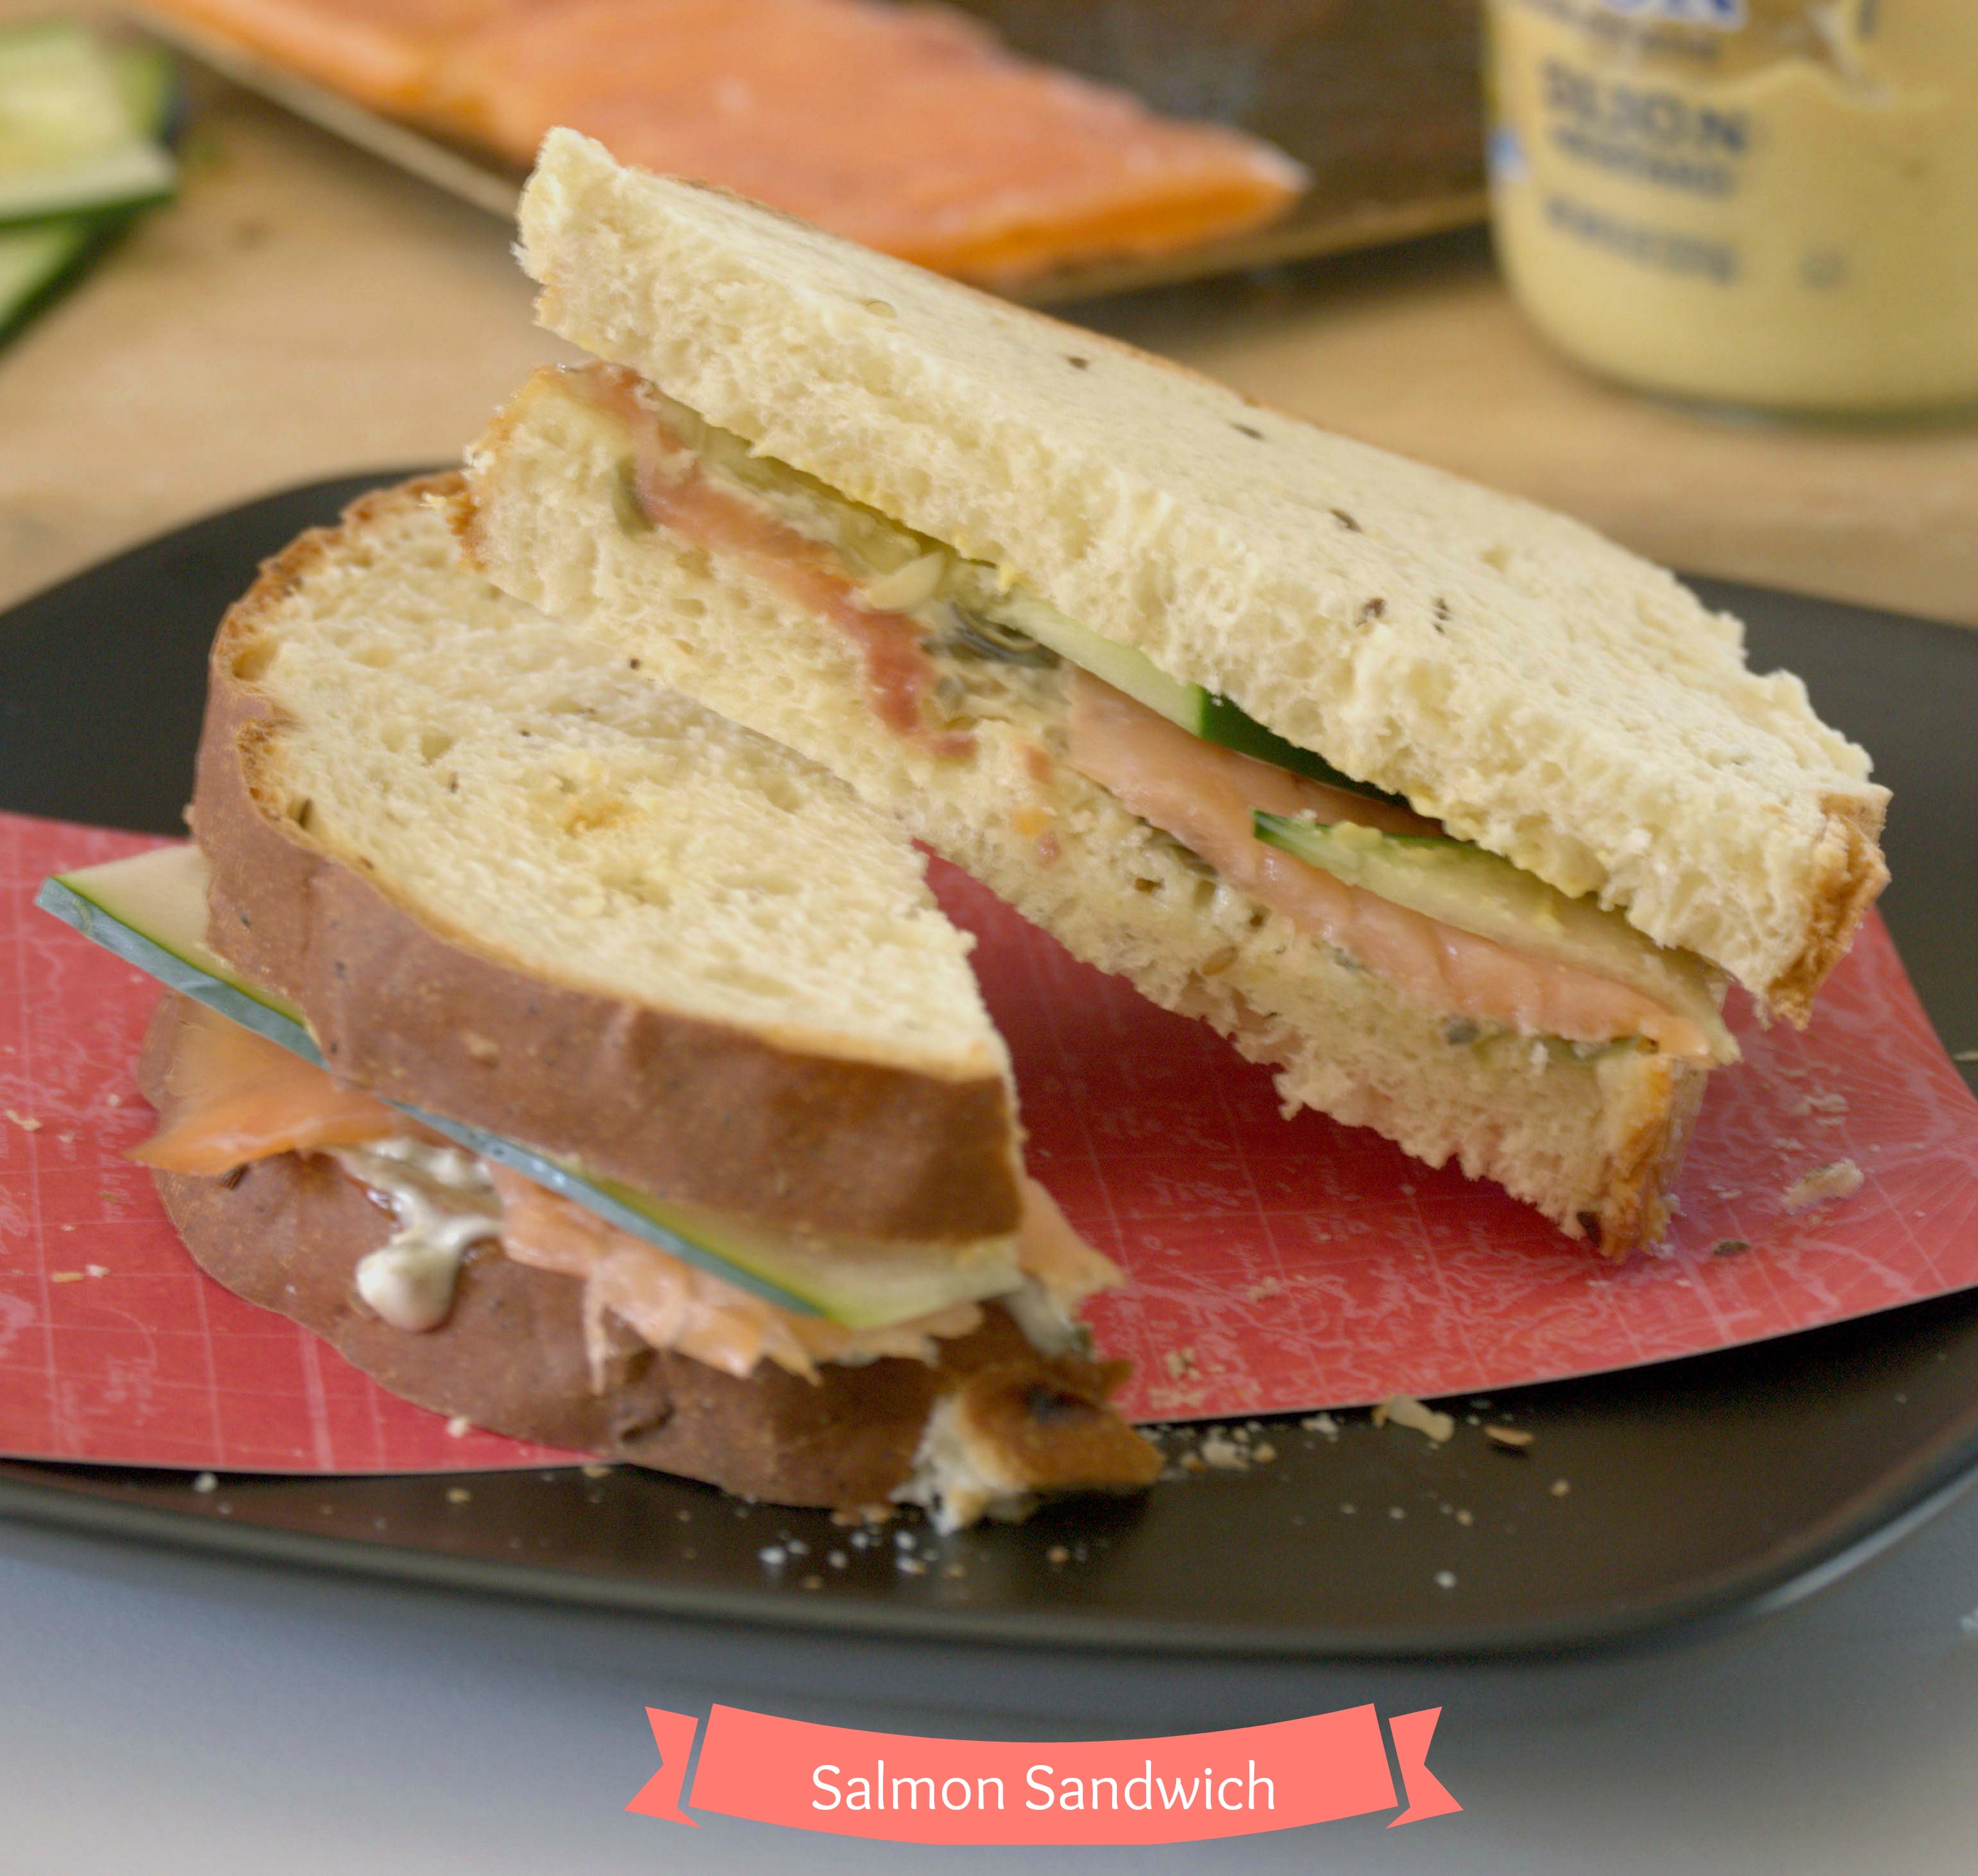 Sándwich de salmón / Smoked Salmon Sandwich